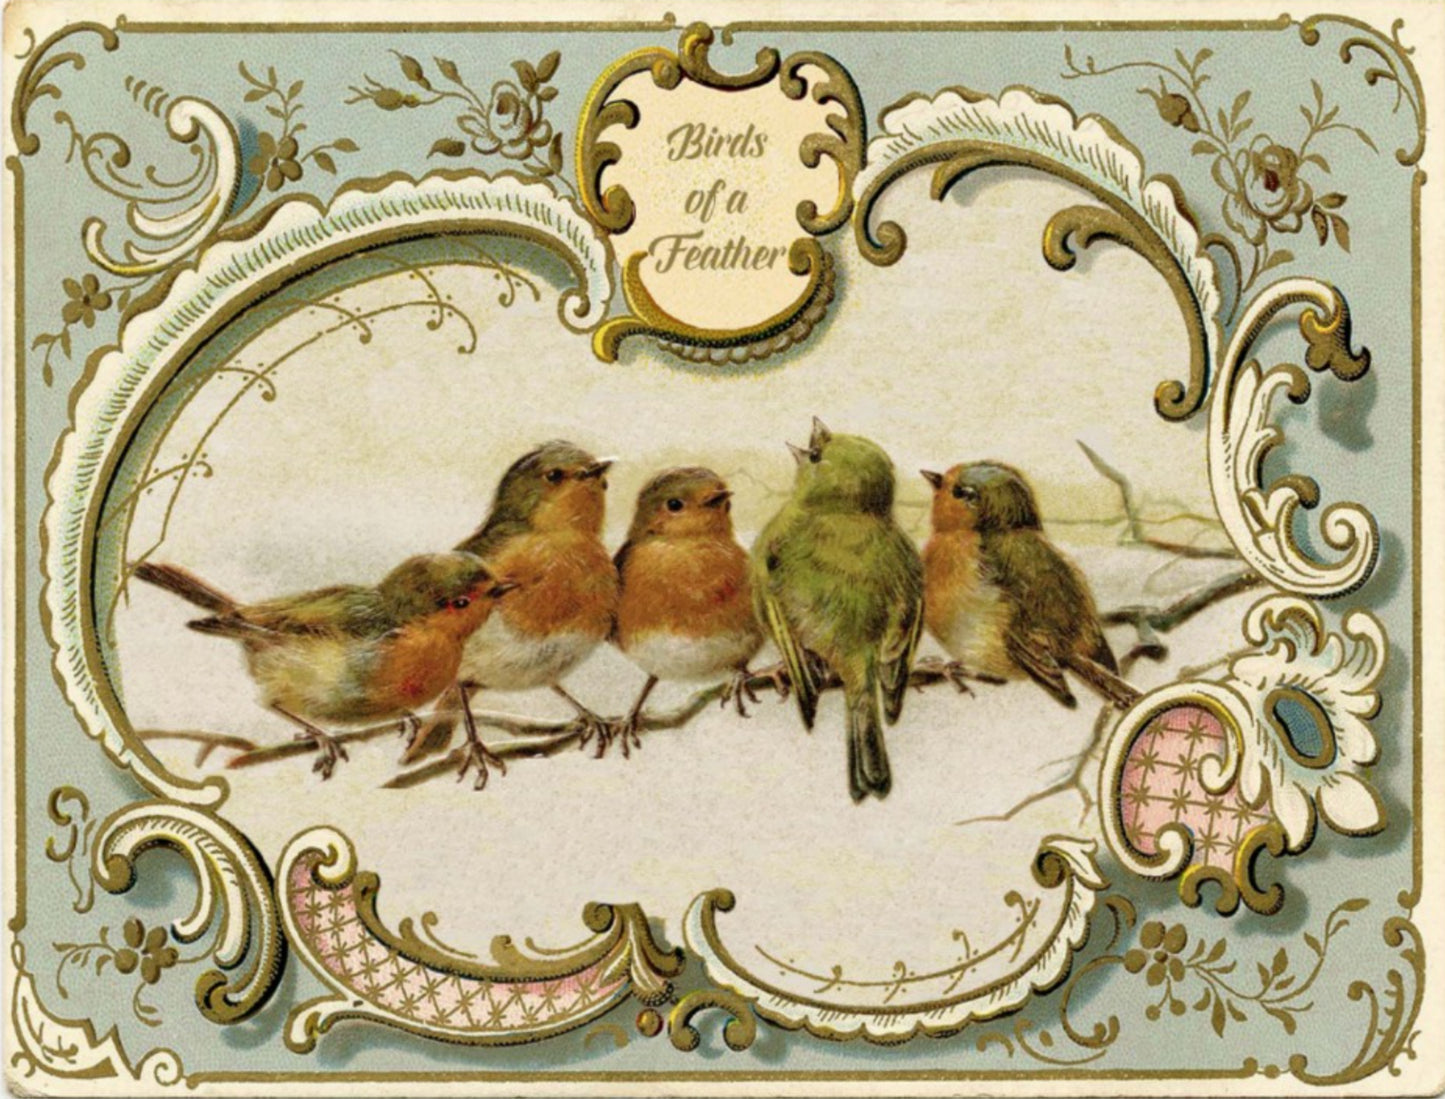 Birds of a Feather - Vintage Birds Singing Postcard